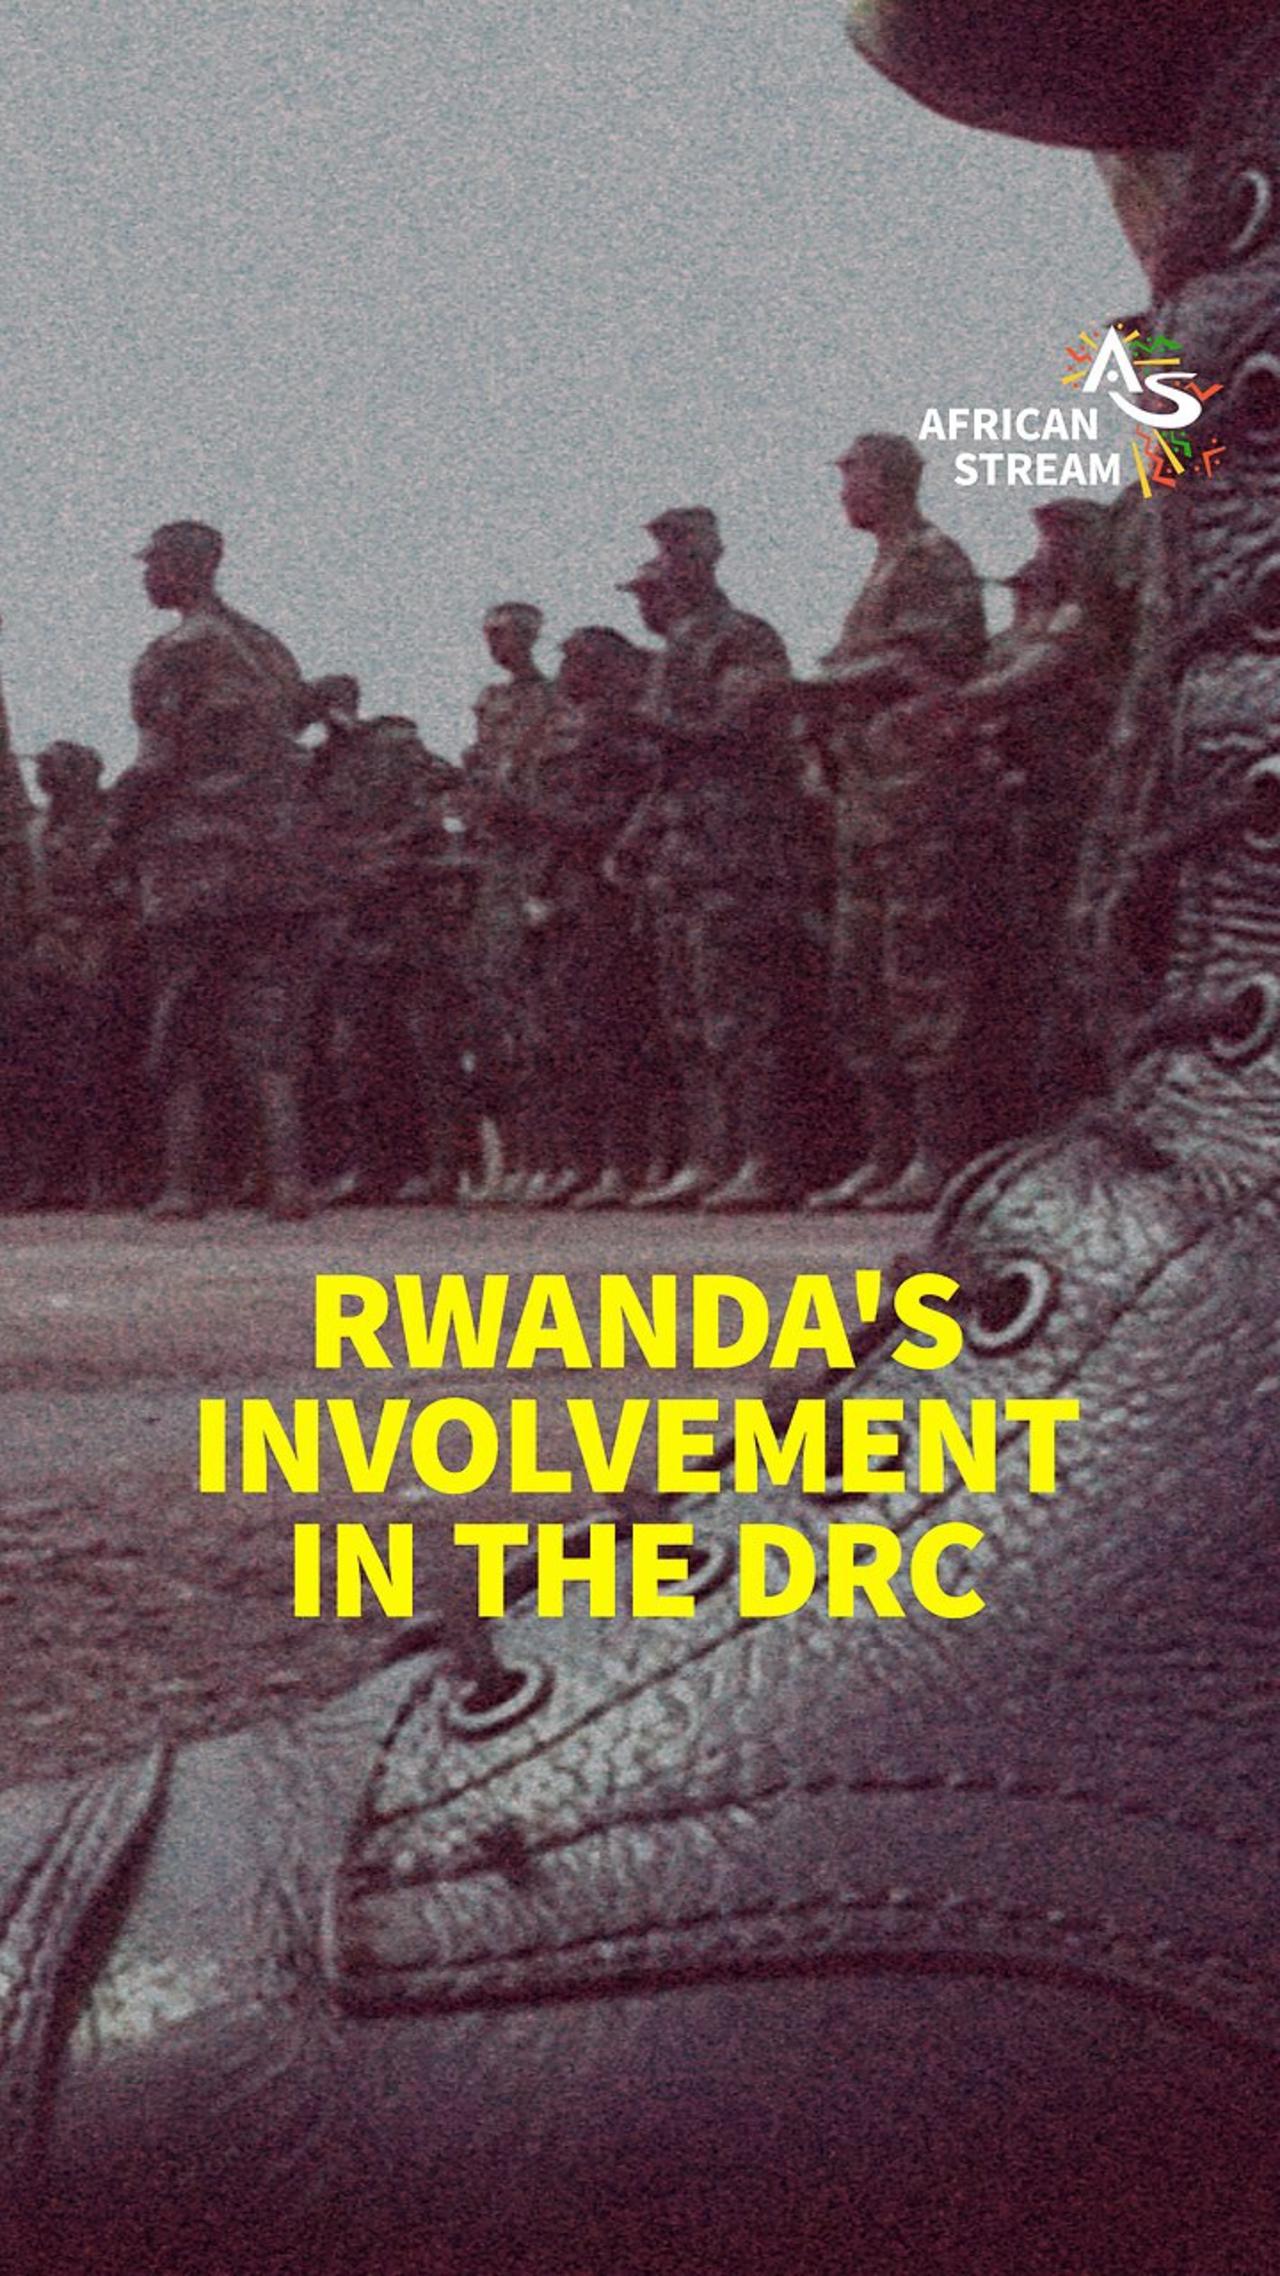 RWANDA'S INVOLVEMENT IN THE DRC